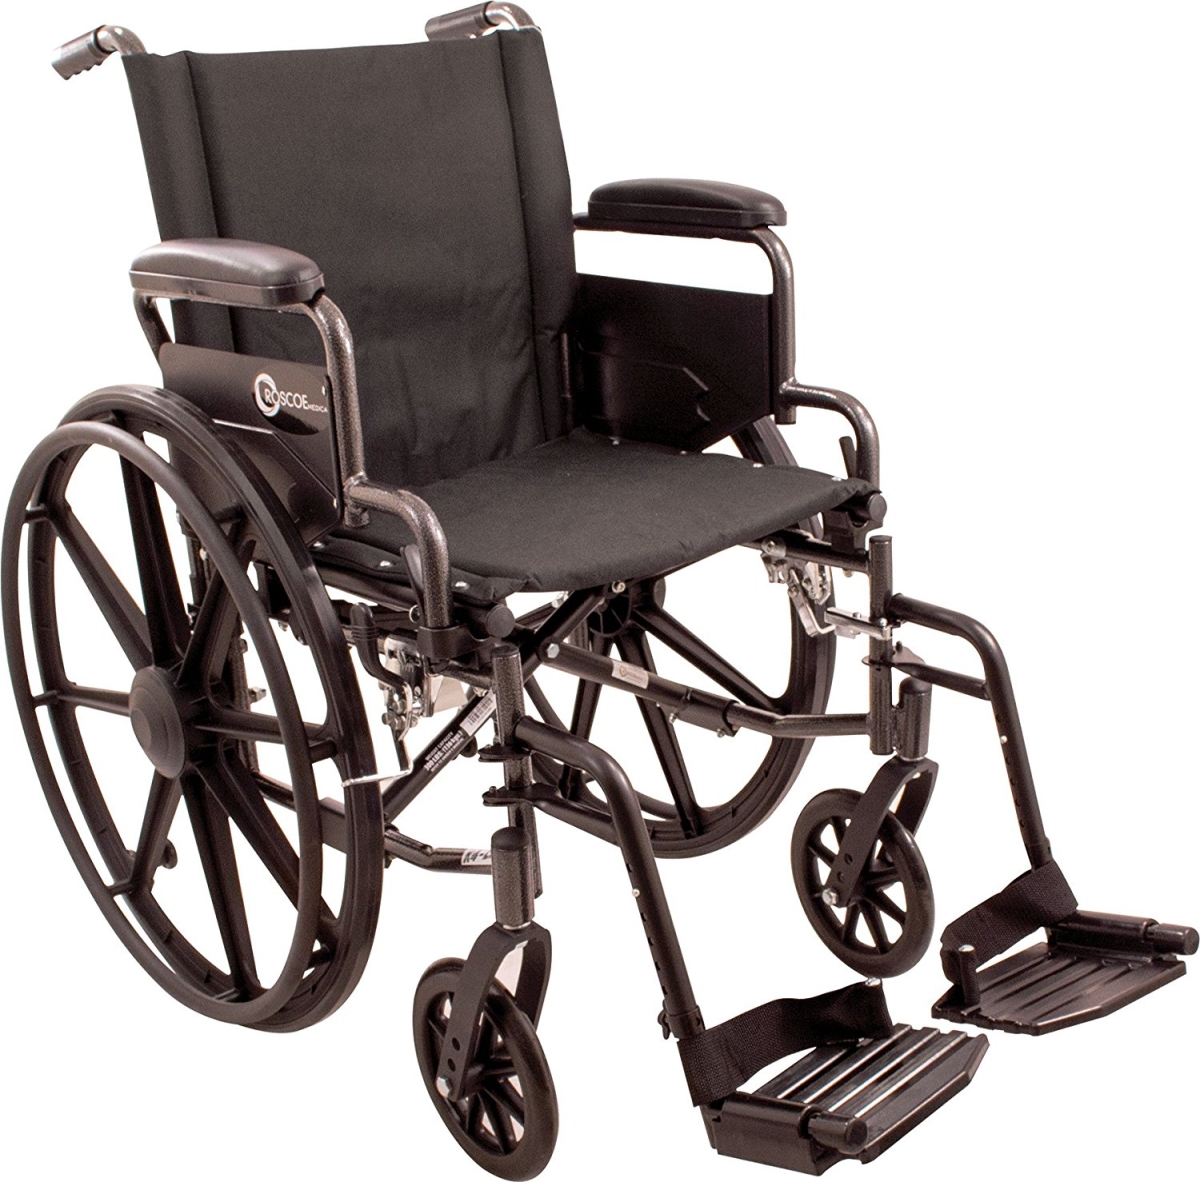 Wc41616ds 16 X 16 In. K4 Swing Away High Strength Wheelchair